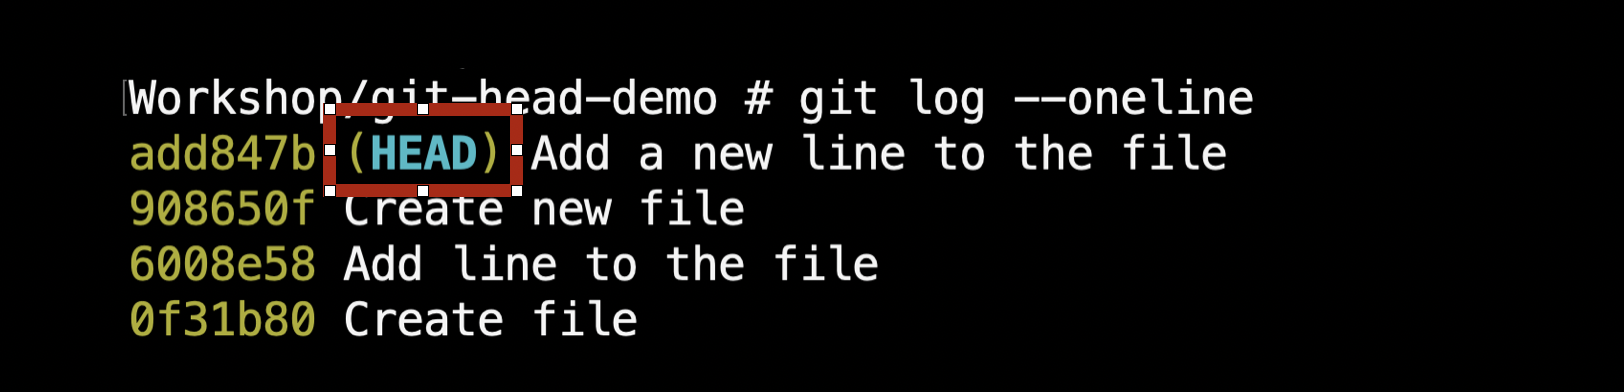 Git log one line